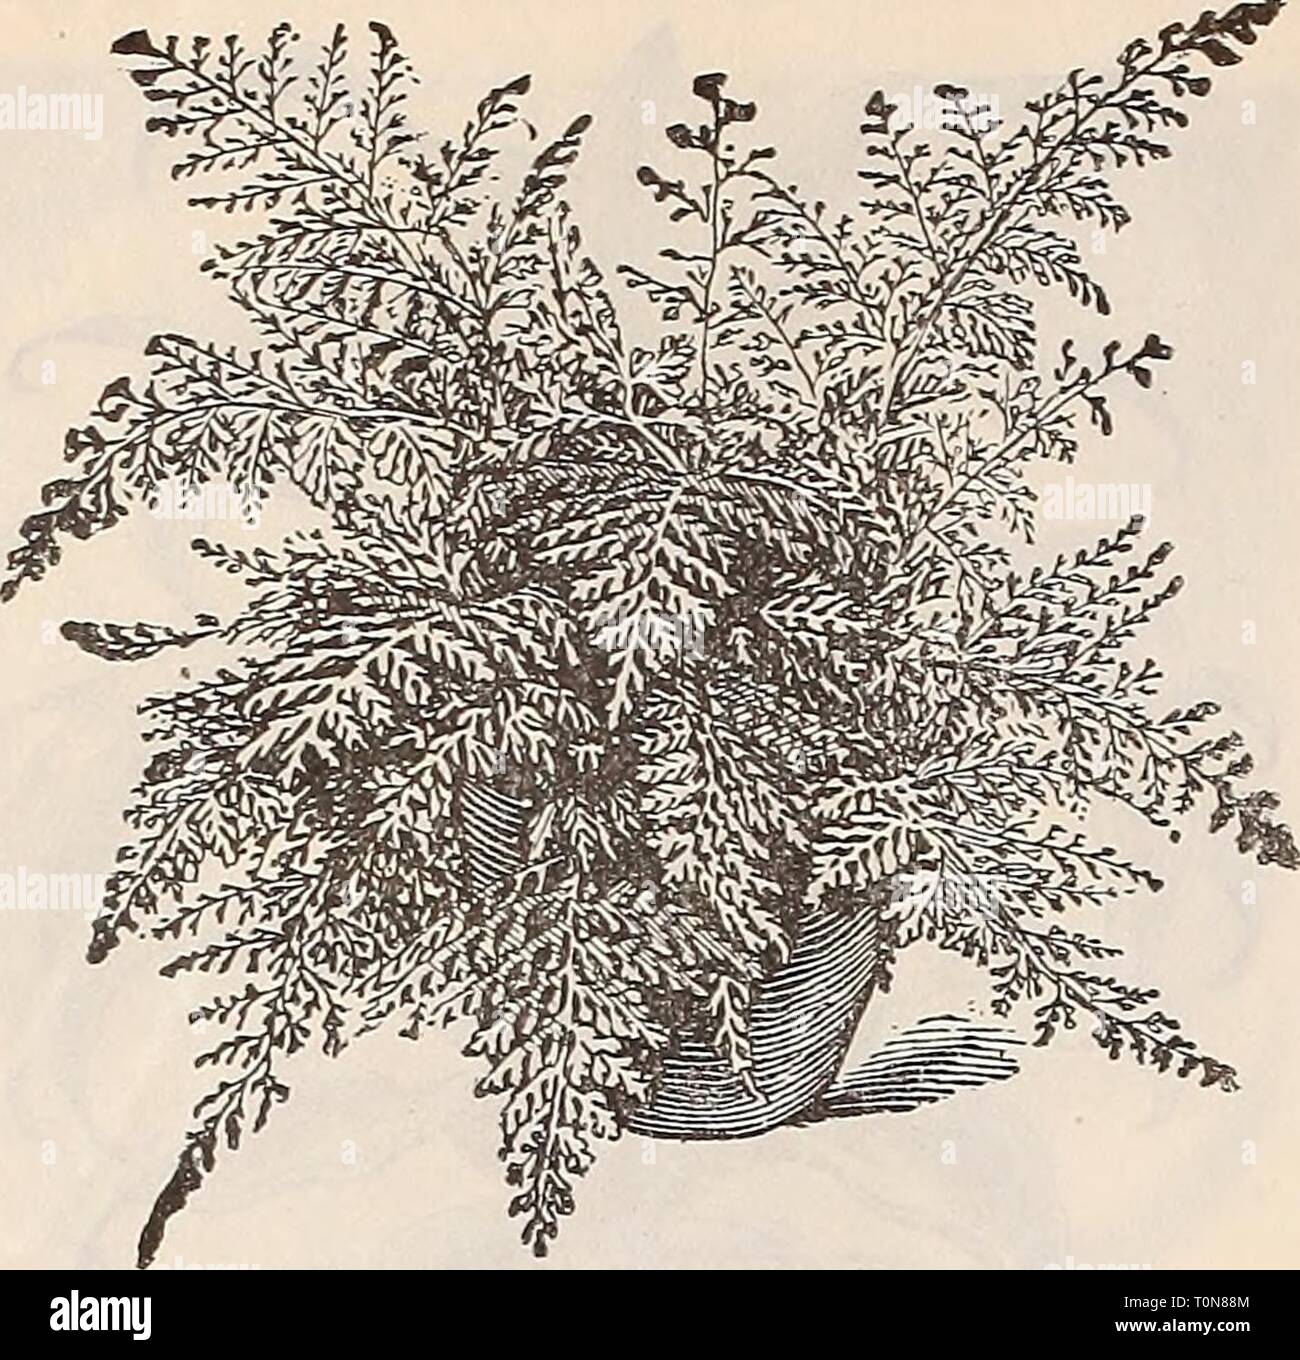 Dreer's autumn 1901 catalogue (1901) Dreer's autumn 1901 catalogue  dreersautumn19011901henr Year: 1901  32 Henry A. Dreev, 714 Chestnut St., Philadelphia, Pa.    Davallia Stricta. Davallia Fijiensis 3Iajus. 15 cts. an — Ornata. 75 cts. — Pentaphylla. 15 cts. — Stricta. 10 cts., 15 cts. and 25 cts. Dietyogramma J a p o n- ica. 25 cts. Variesata. 25 cts. Didymoeblaena Trimca- tula. 15 cts. Gymnog r a m ma S n 1 - pburea. 15 cts. La st re a Aristata Variegata. 10 cts. — Clirysoloba. 10 cts. — Opaea. 10 cts. Lomaria Ciliata. 10 cts. — Gibba. 10 cts. Lygodium Scanclens. 15 cts. — Dicliotonium. 25  Stock Photo